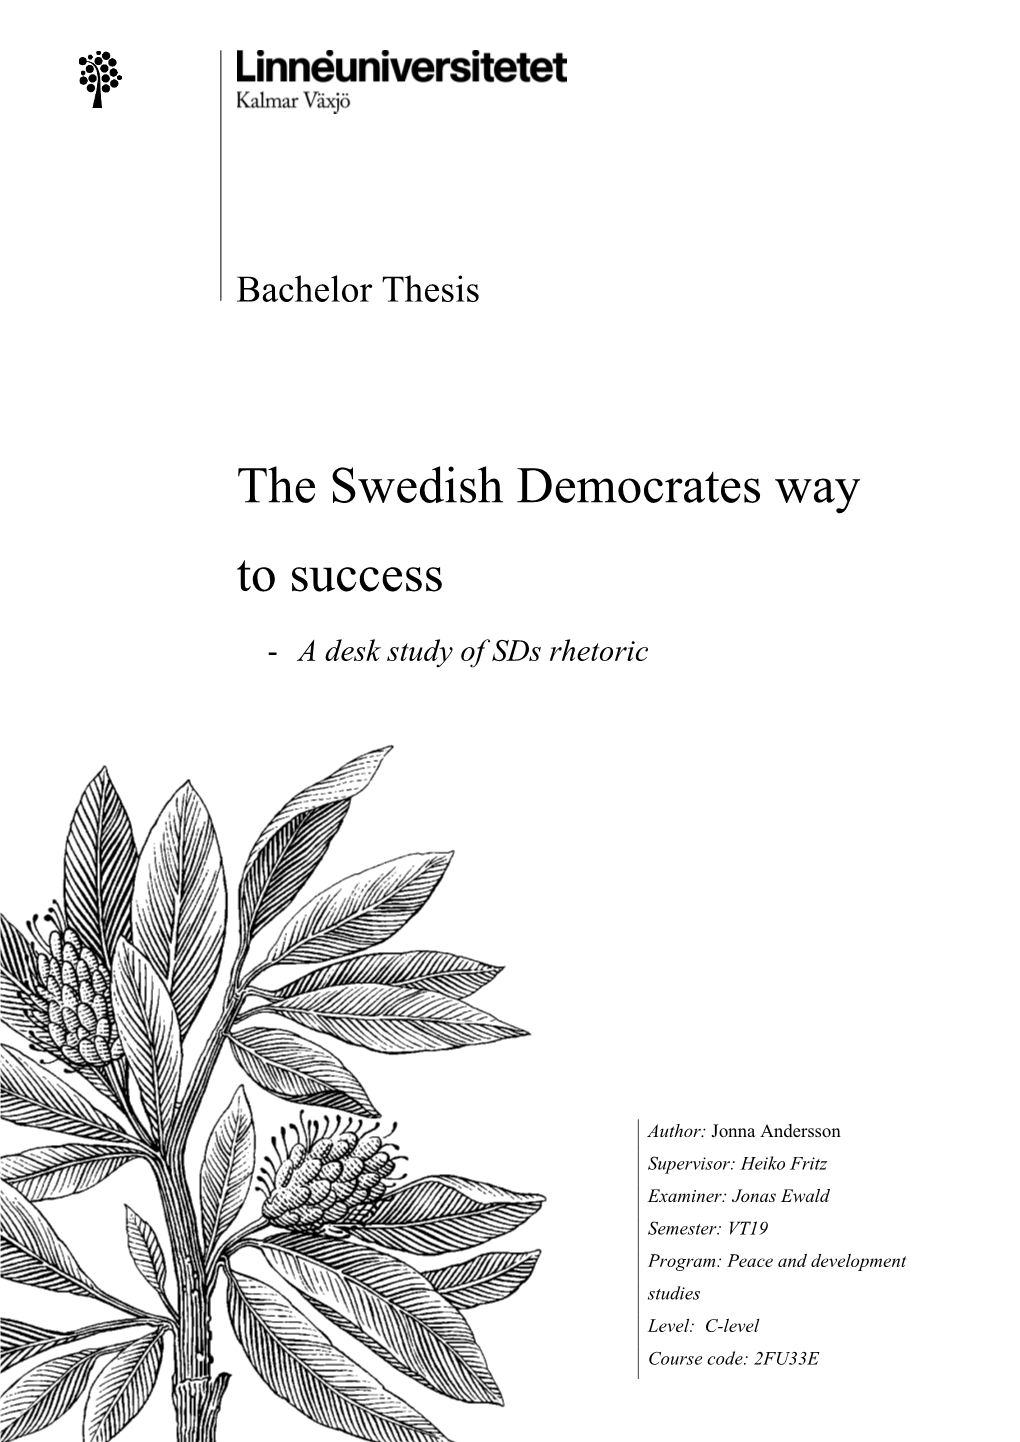 The Swedish Democrates Way to Success